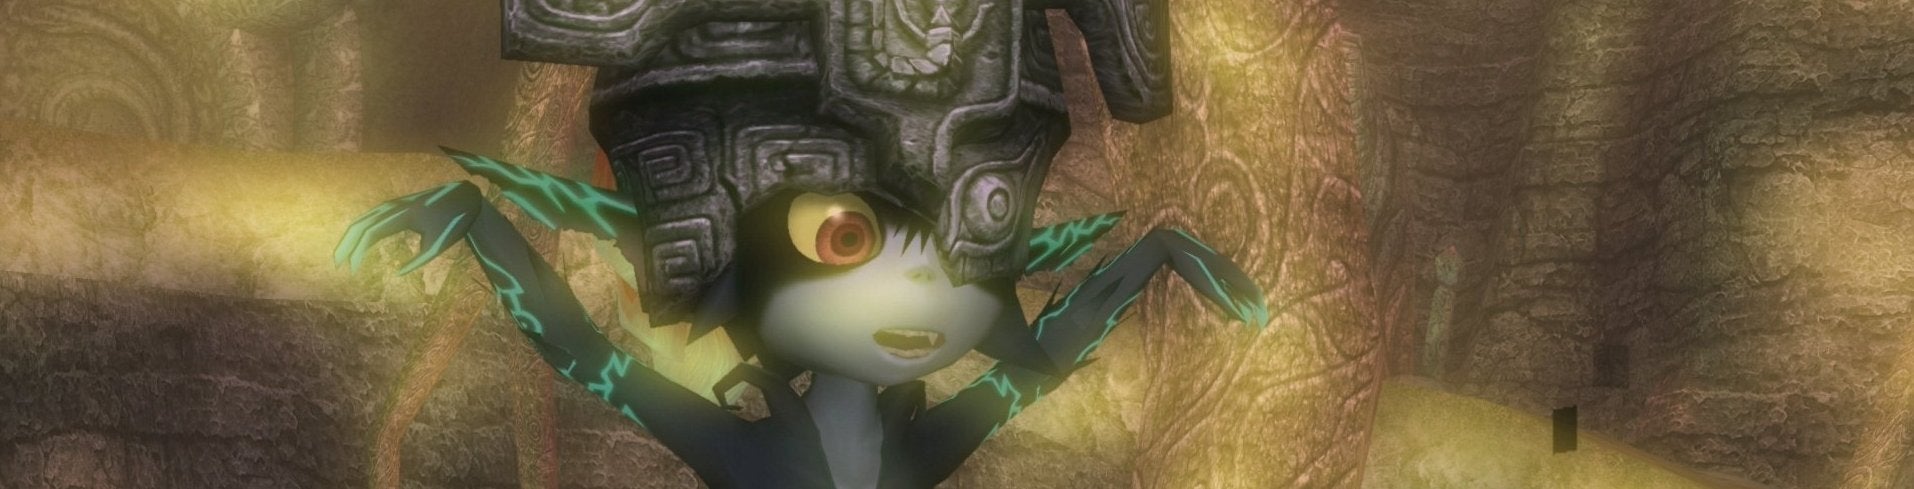 Imagem para The Legend of Zelda: Twilight Princess HD - Análise